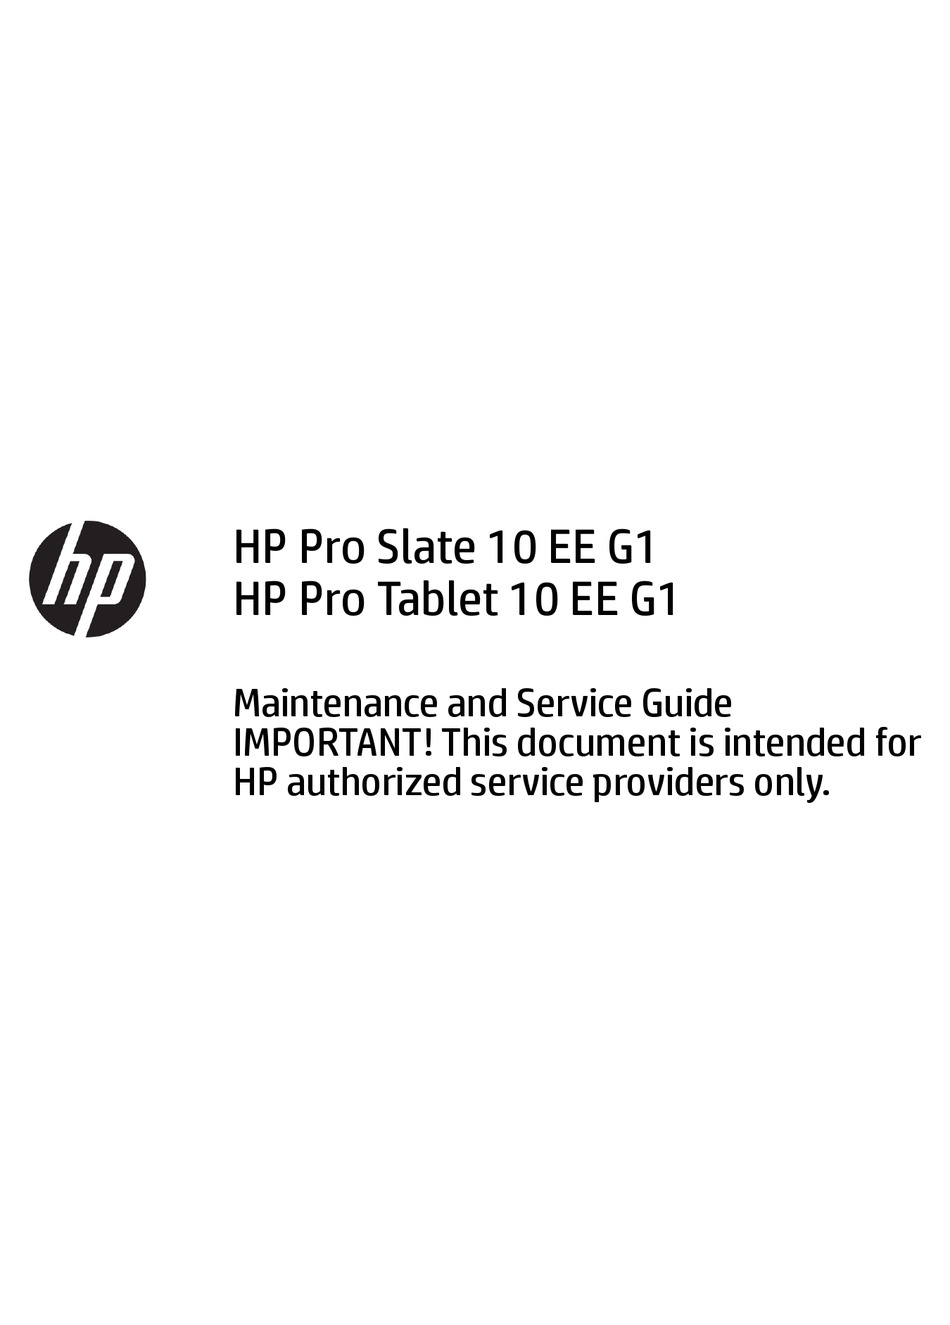 Hp Pro Slate 10 Ee G1 Maintenance And Service Manual Pdf Download Manualslib